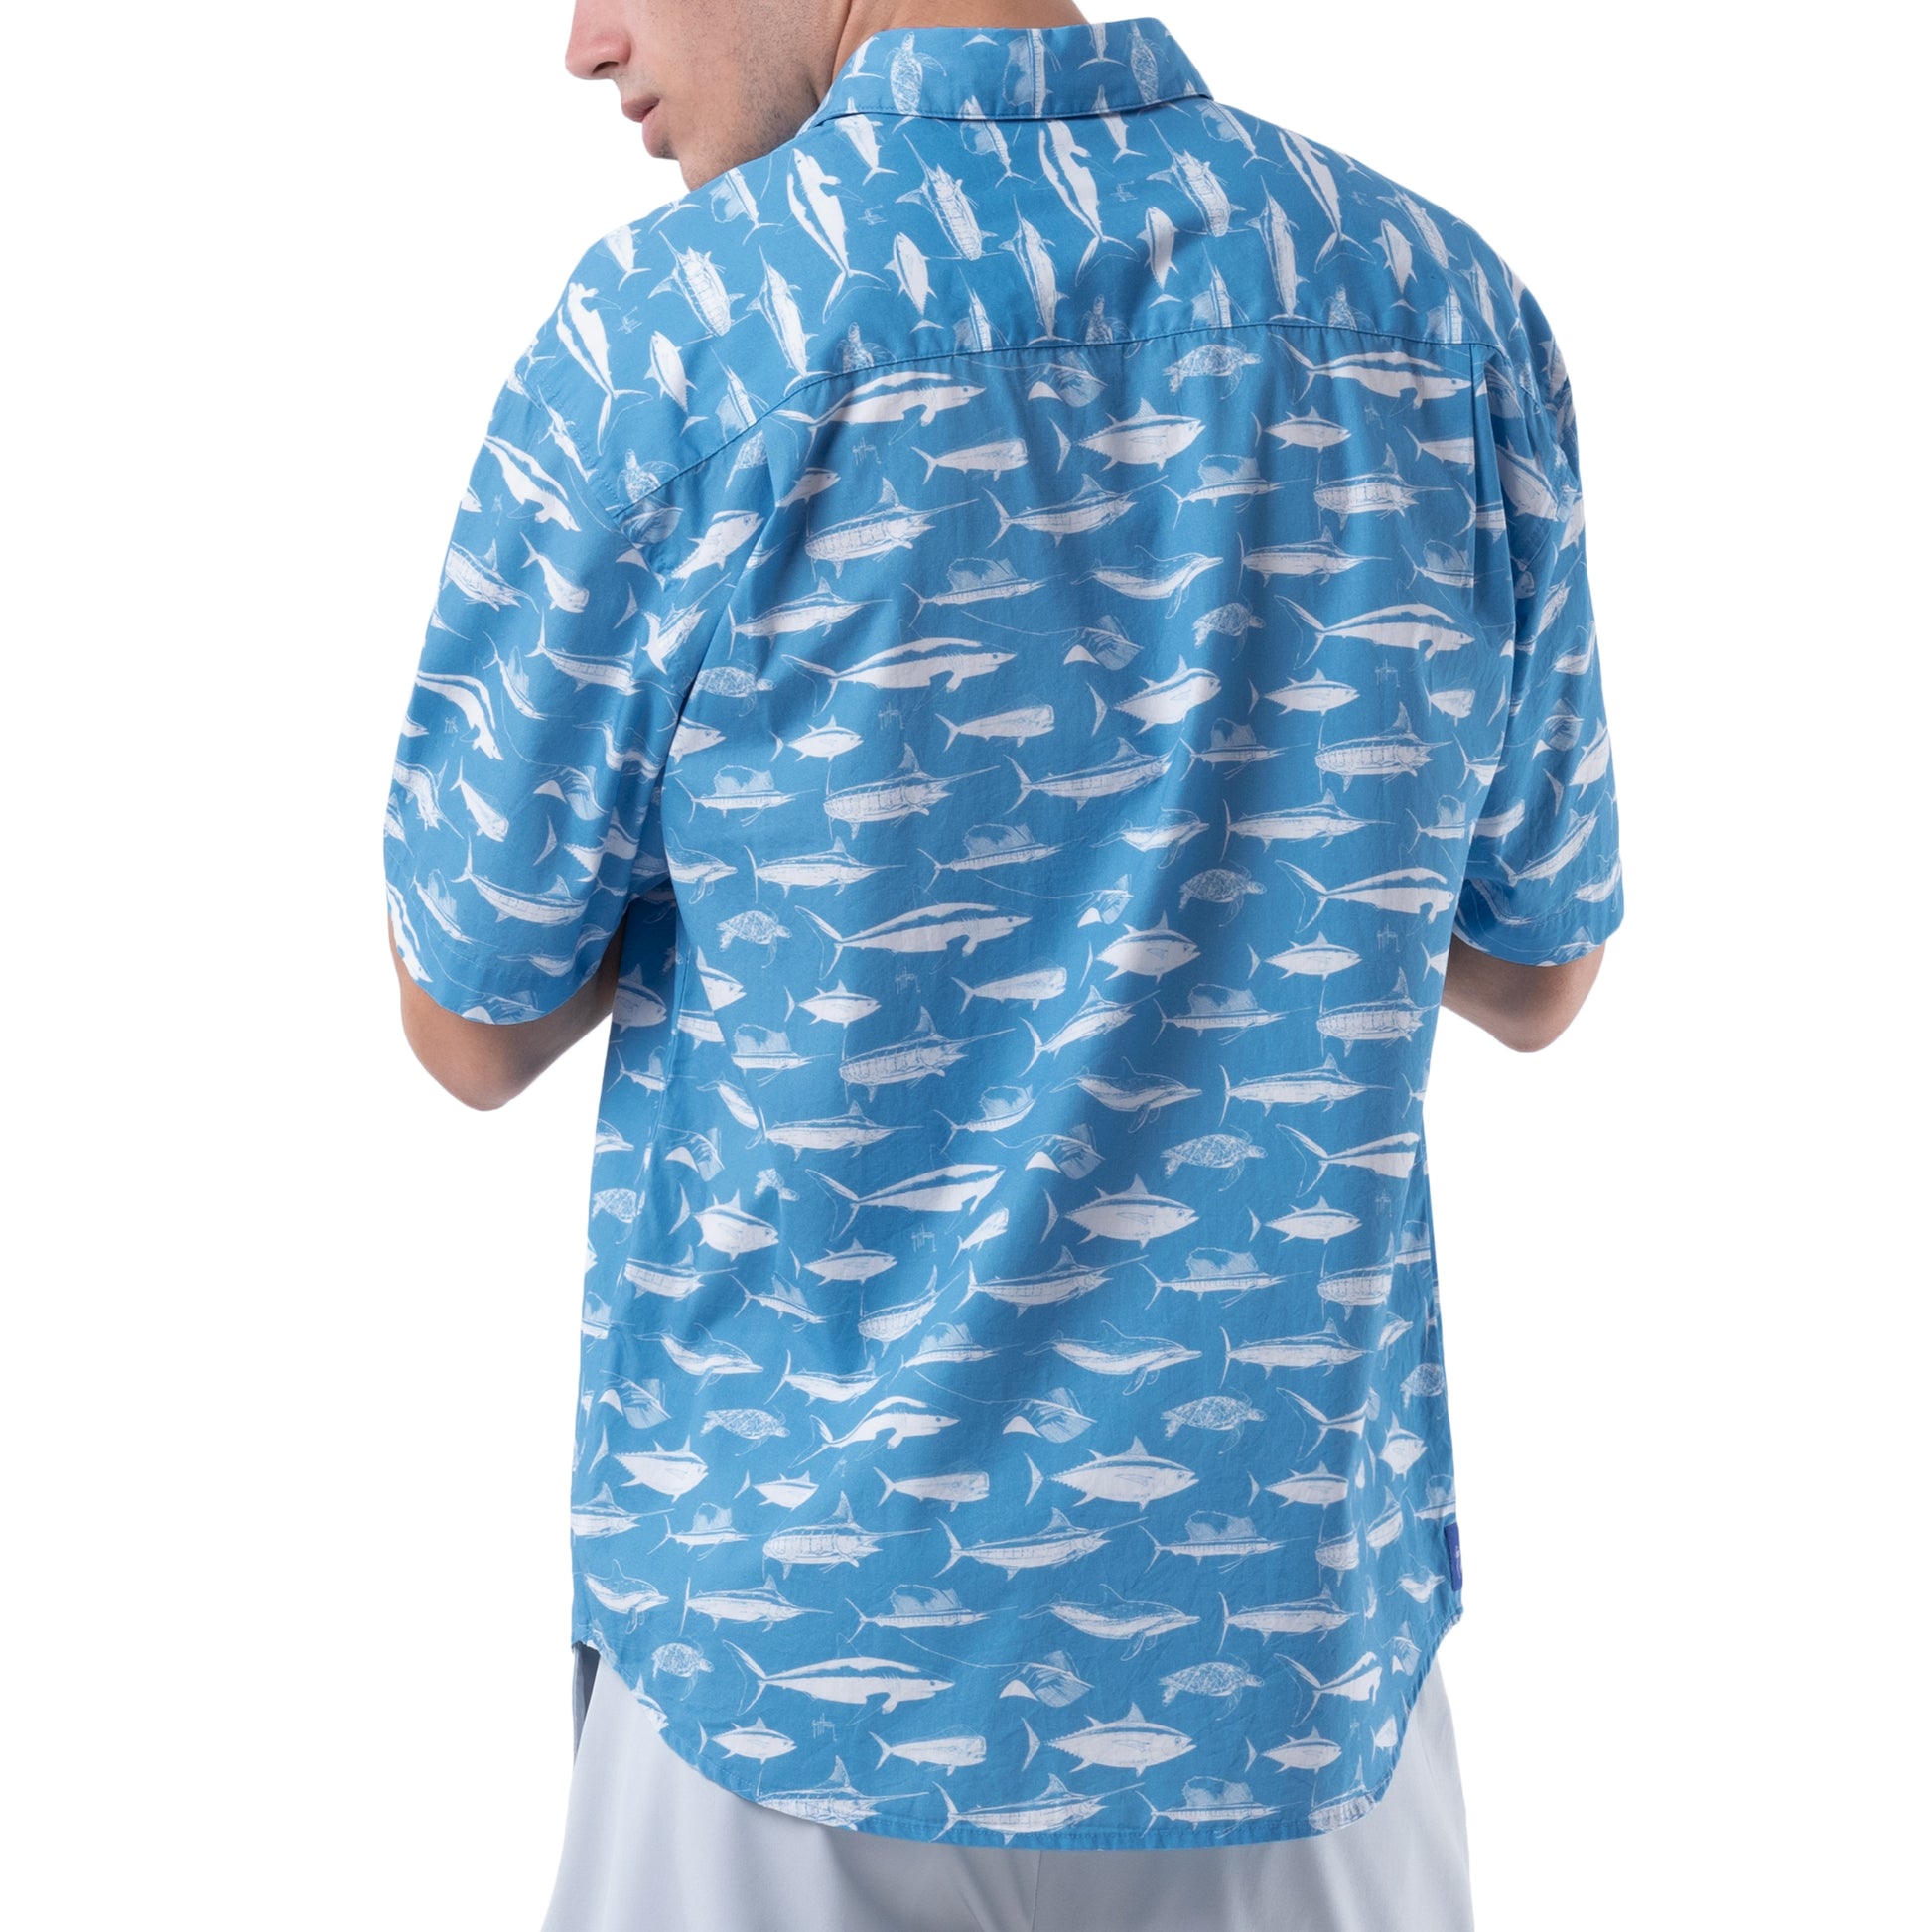 Navy Blue Zman Logo Tee Shirt - 100% Cotton Short Sleeve Fishing Shirt